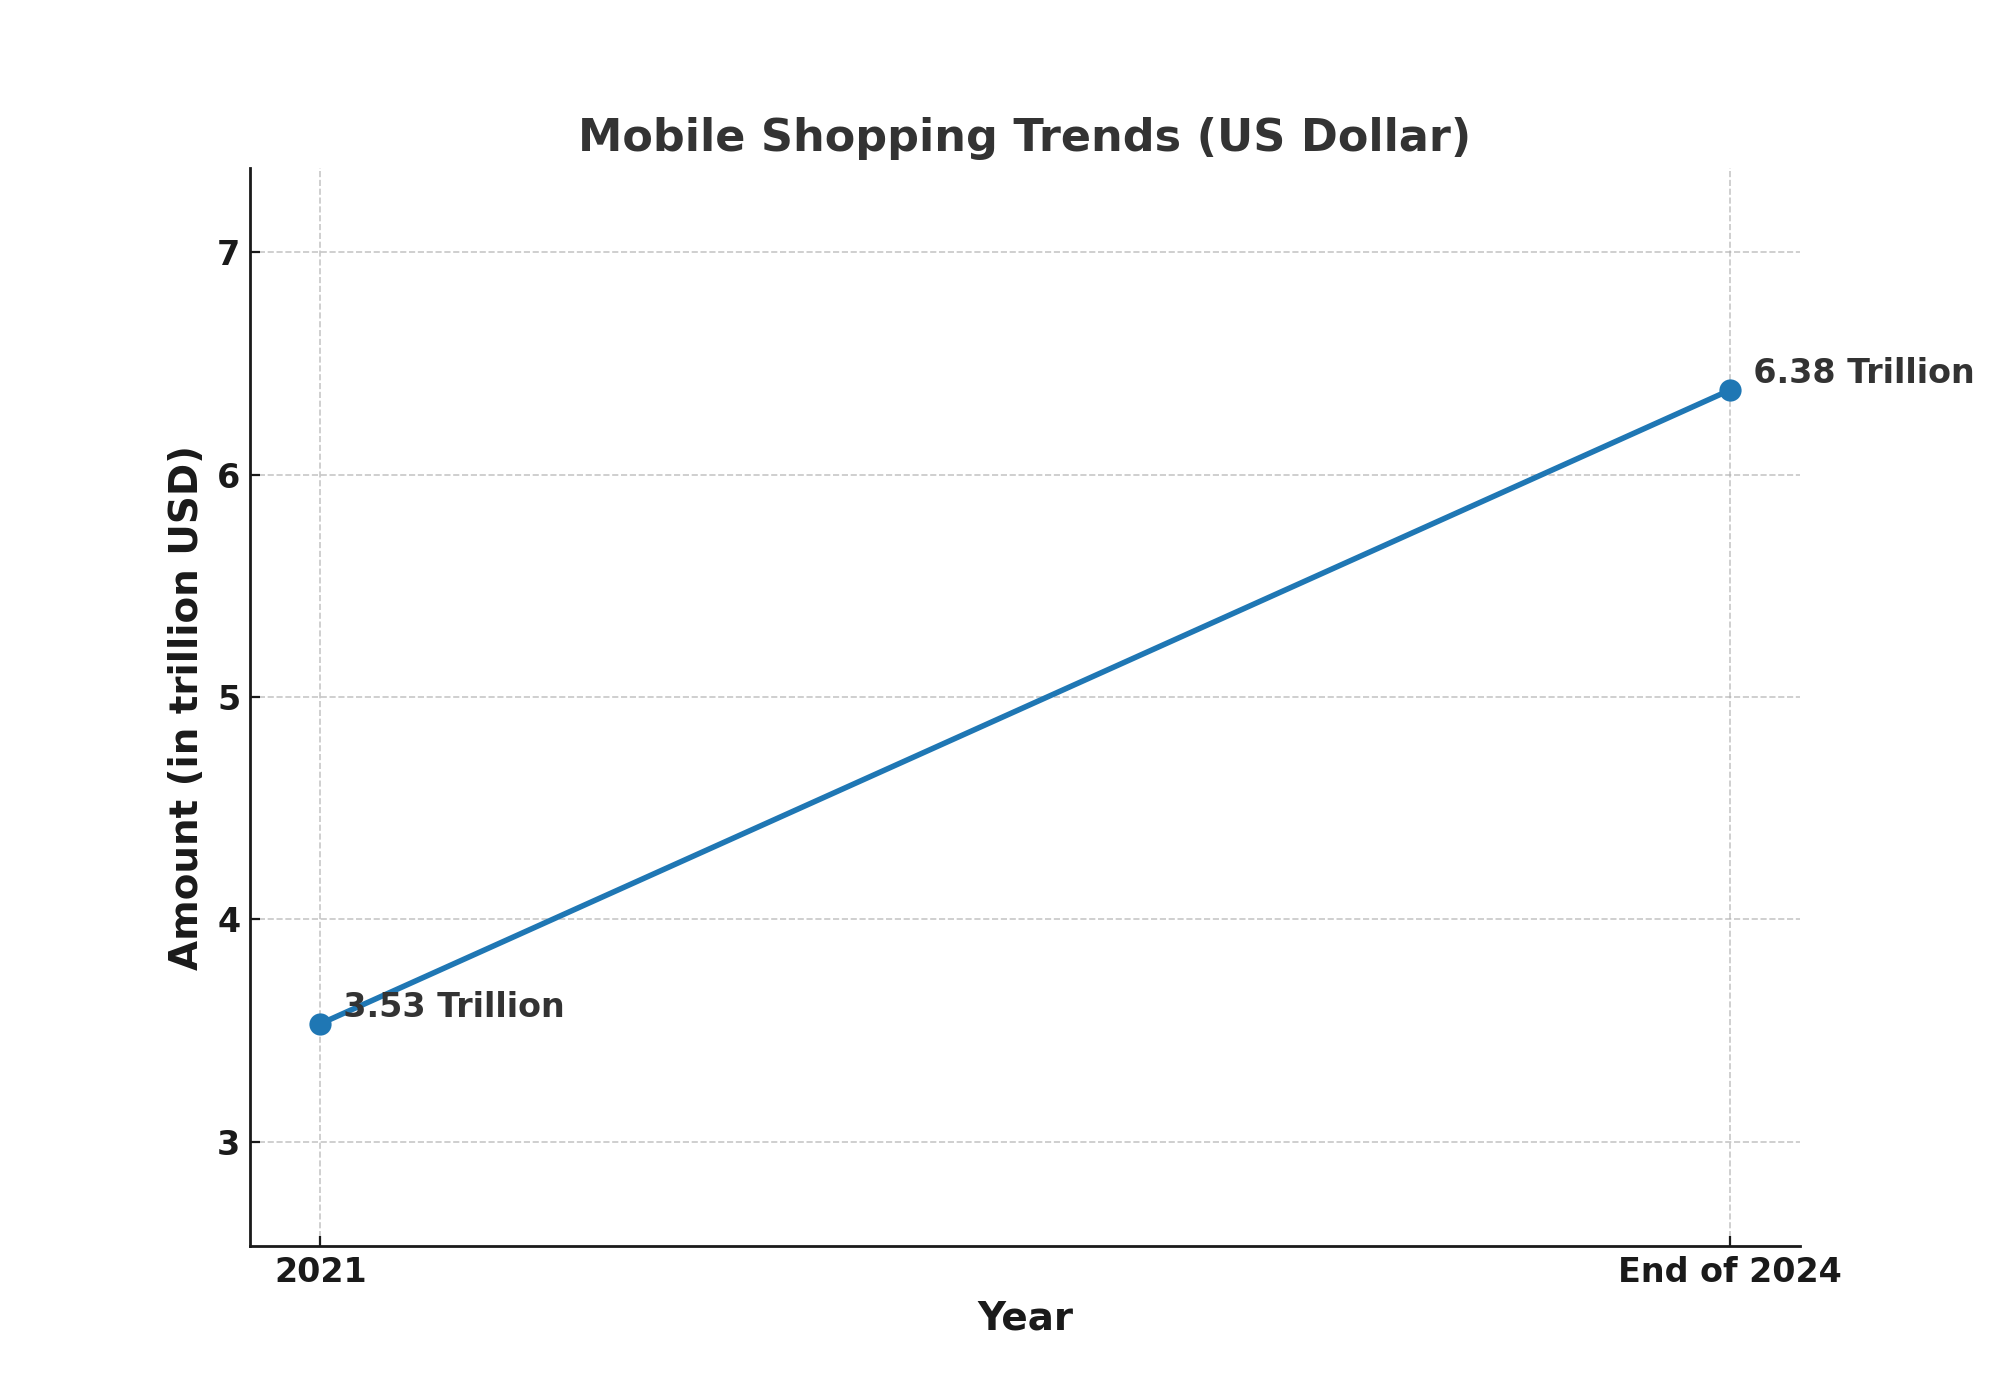 Mobile shopping in dollar